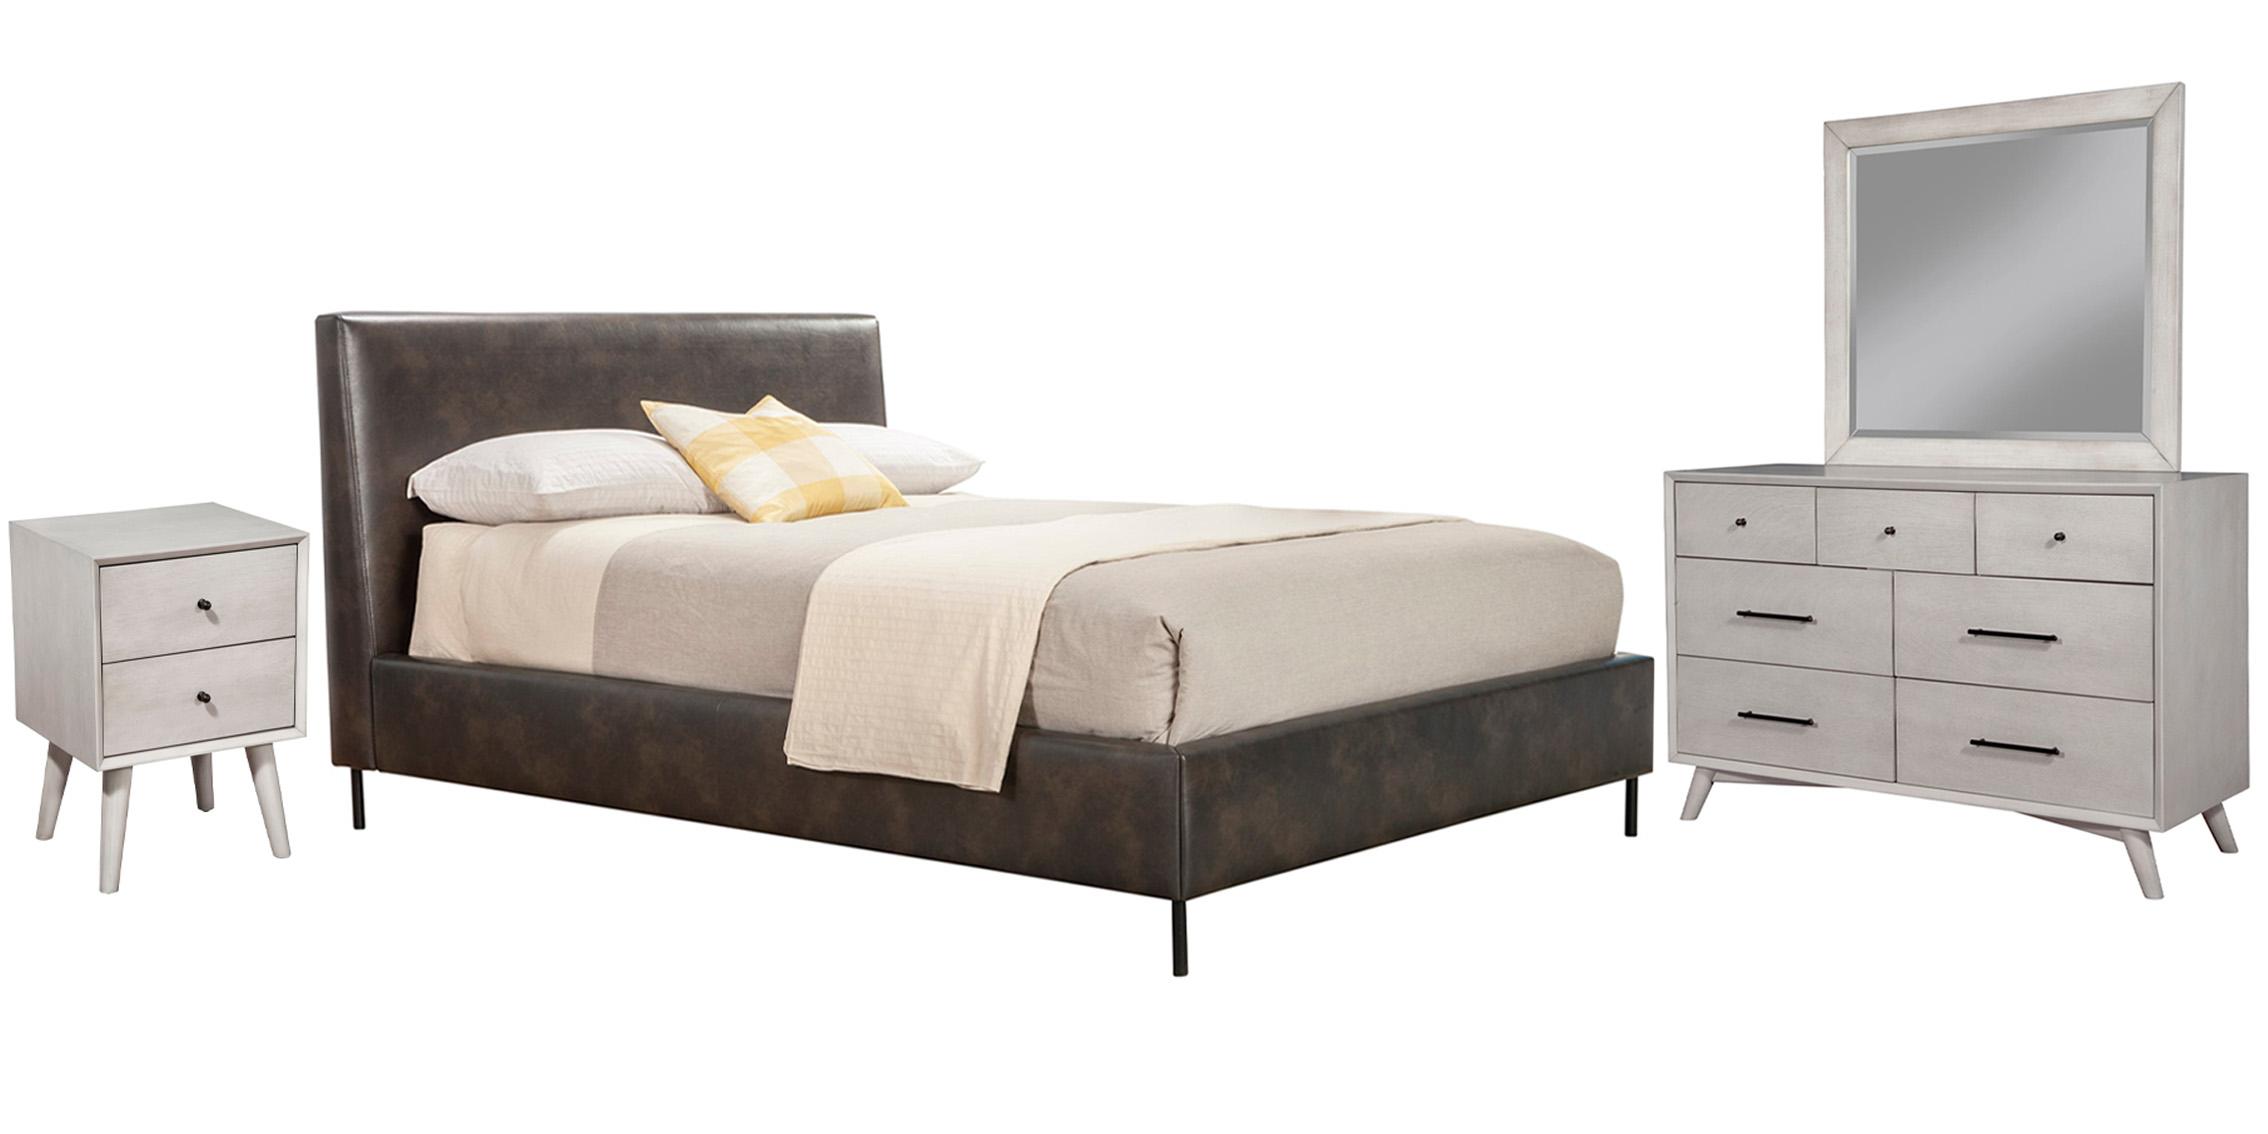 Modern Platform Bedroom Set SOPHIA / FLYNN 6902CK-GRY-Set-4 in Gray Faux Leather